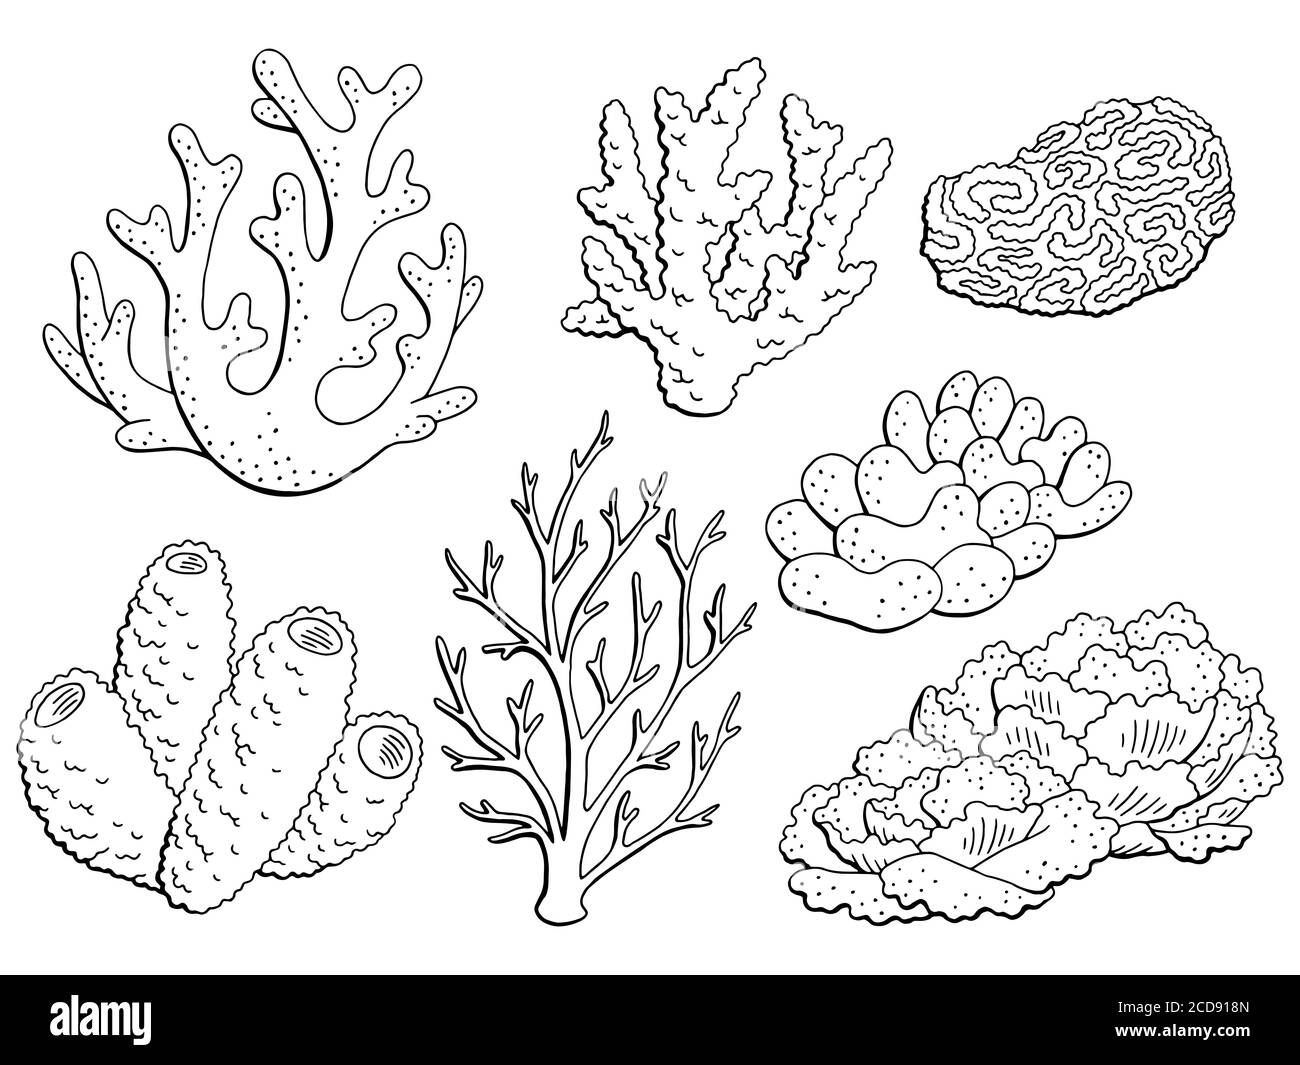 Coral Set Grafik schwarz weiß isoliert Skizze Illustration Vektor Stock Vektor